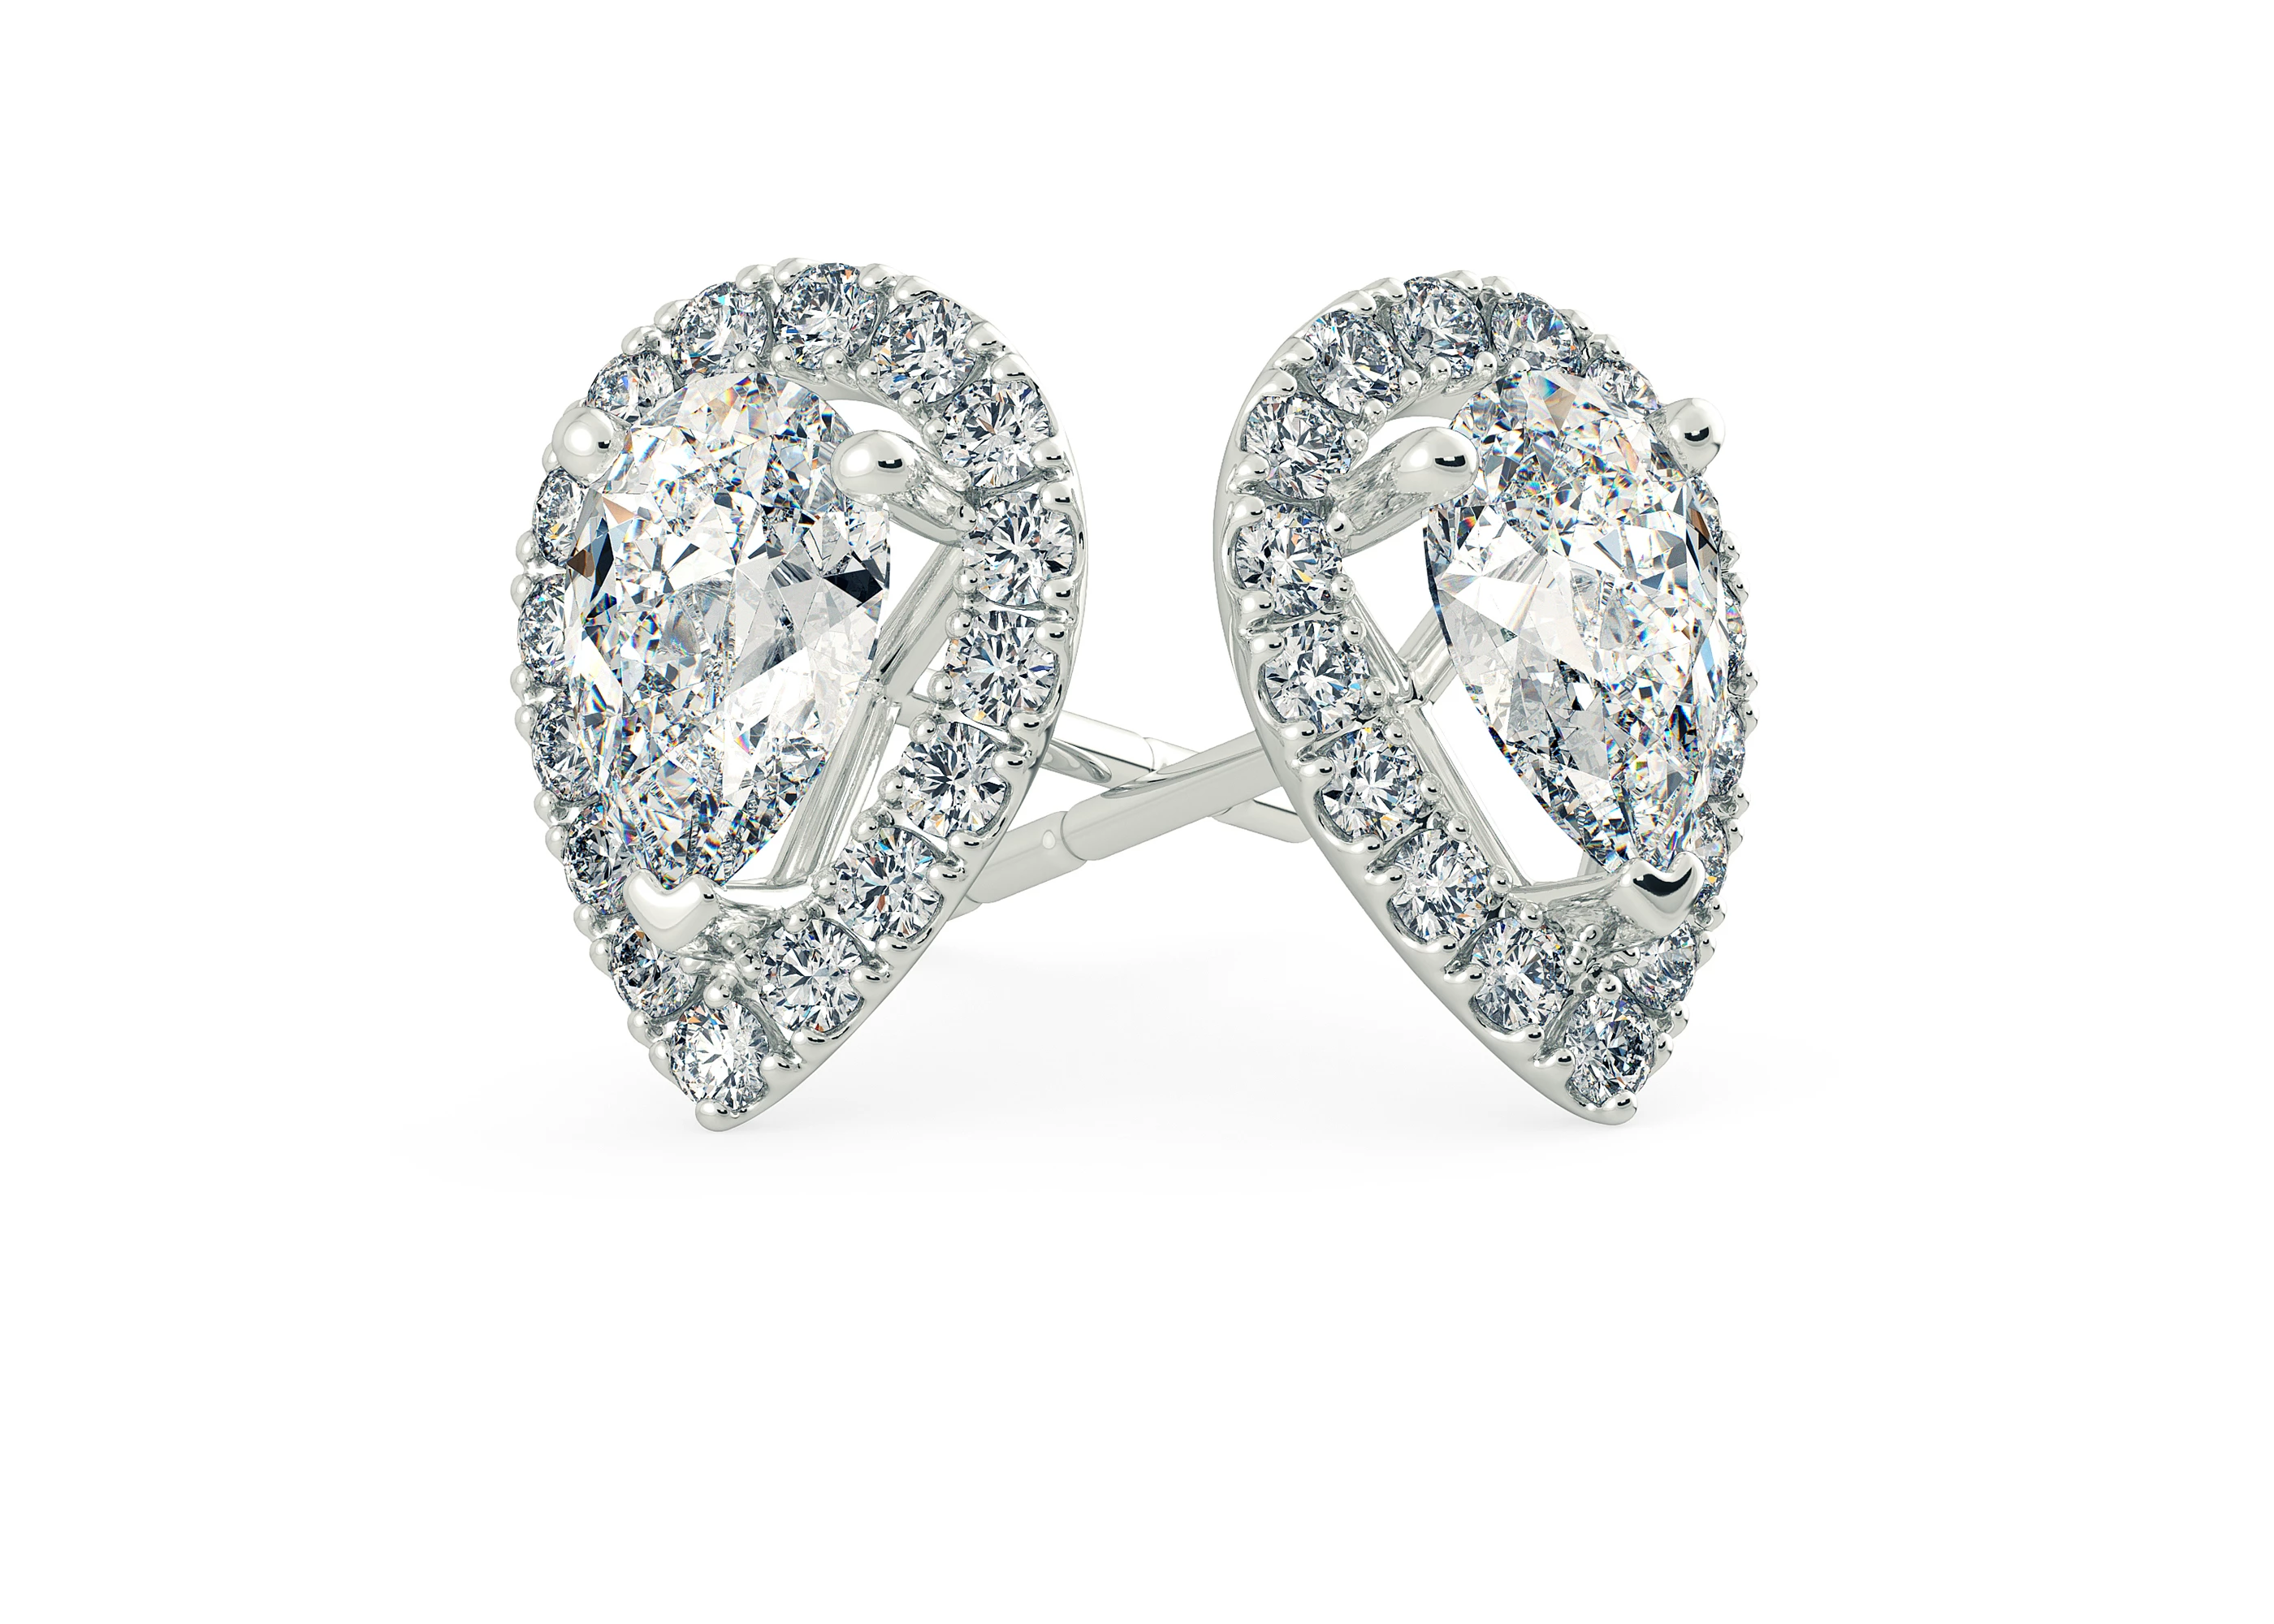 Bijou Pear Diamond Stud Earrings in Platinum with Butterfly Backs